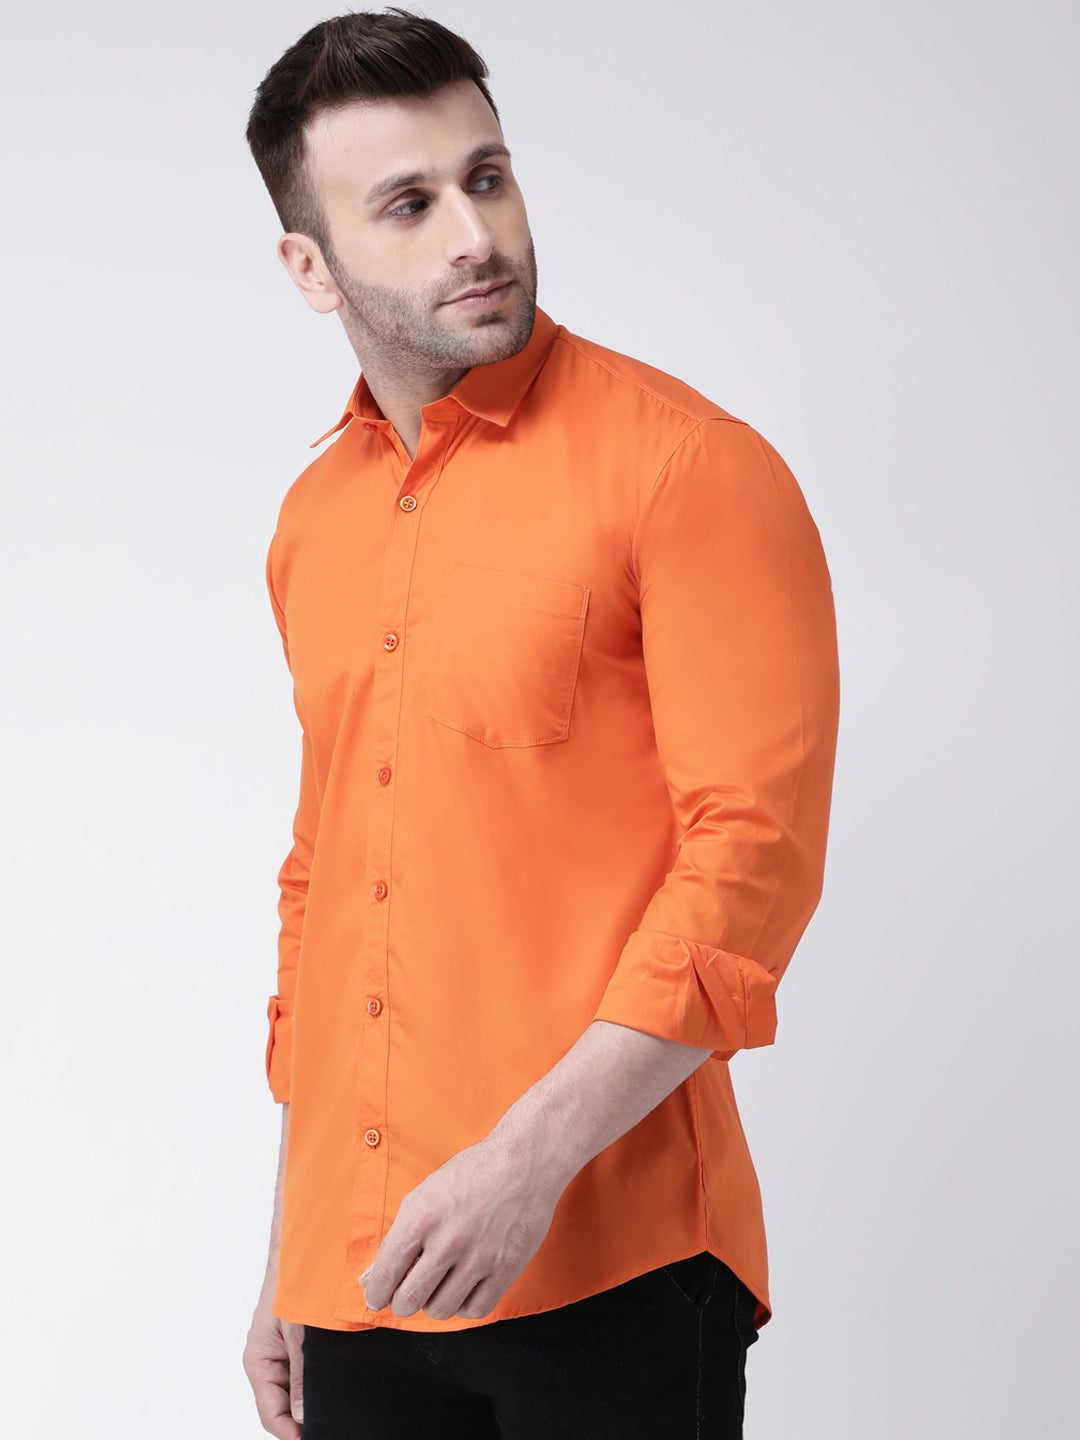 Men's Casual Orange Shirt